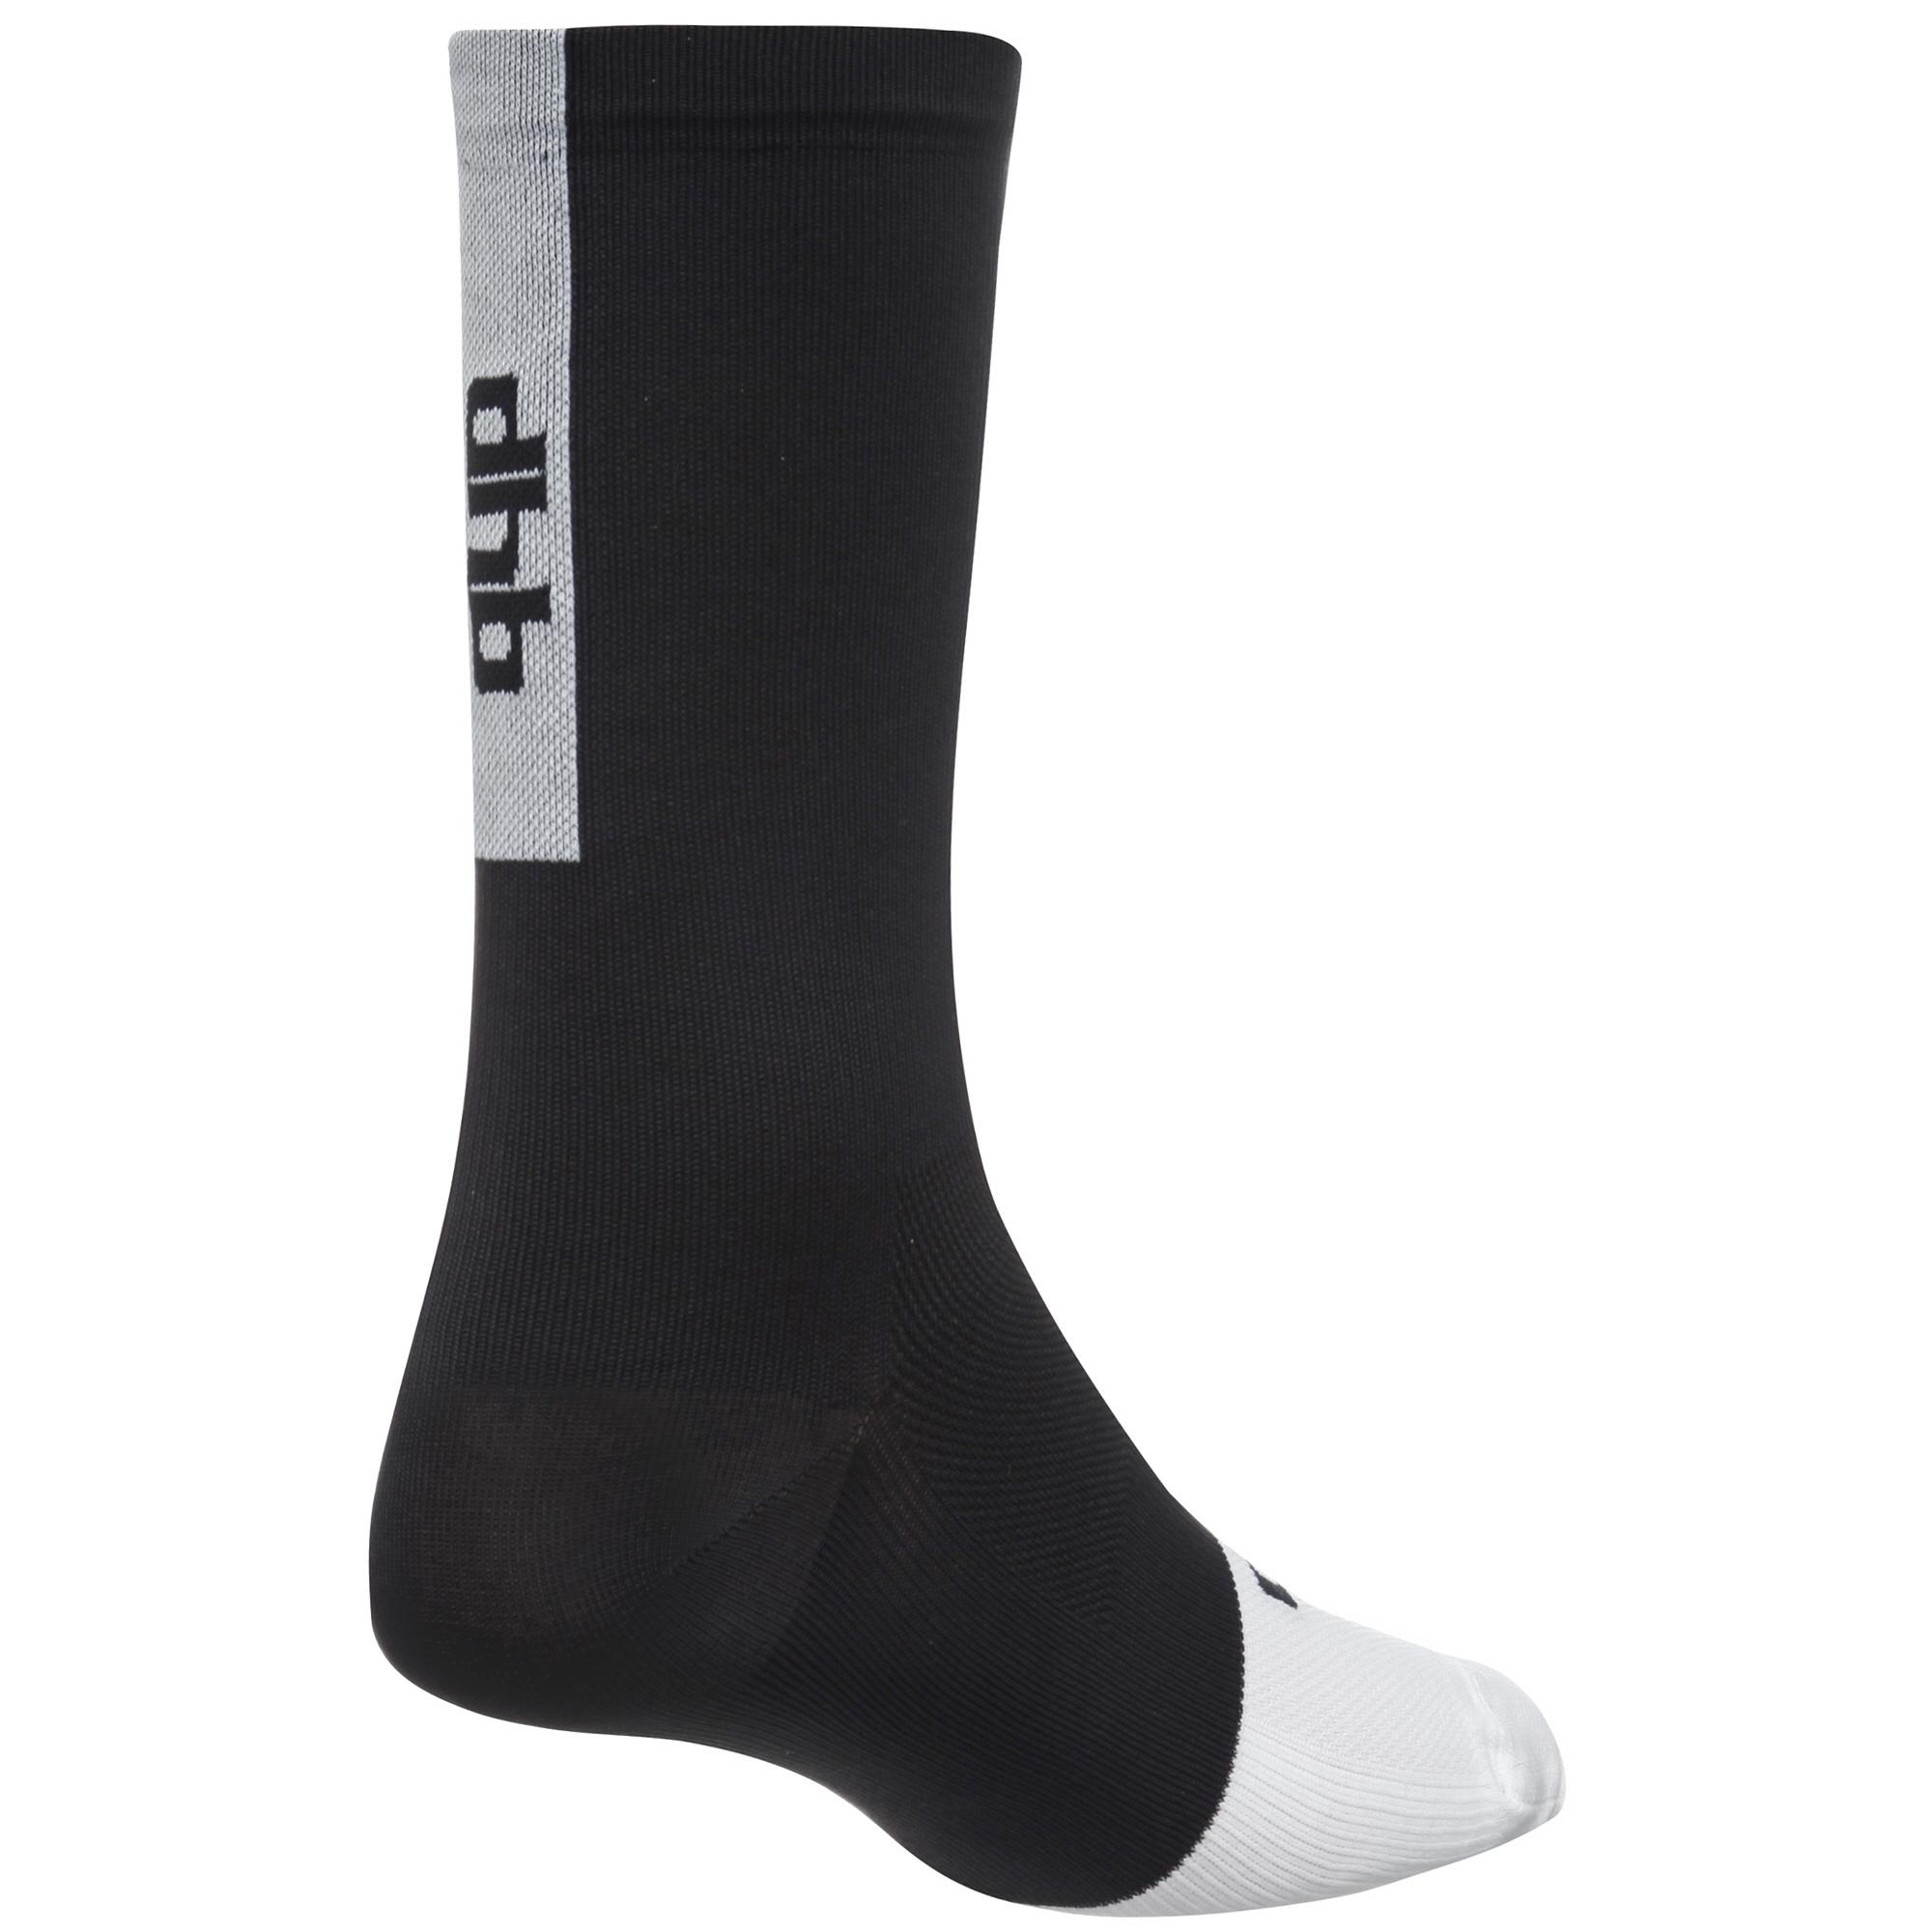 Dhb Aeron Tall Sock - Black/white